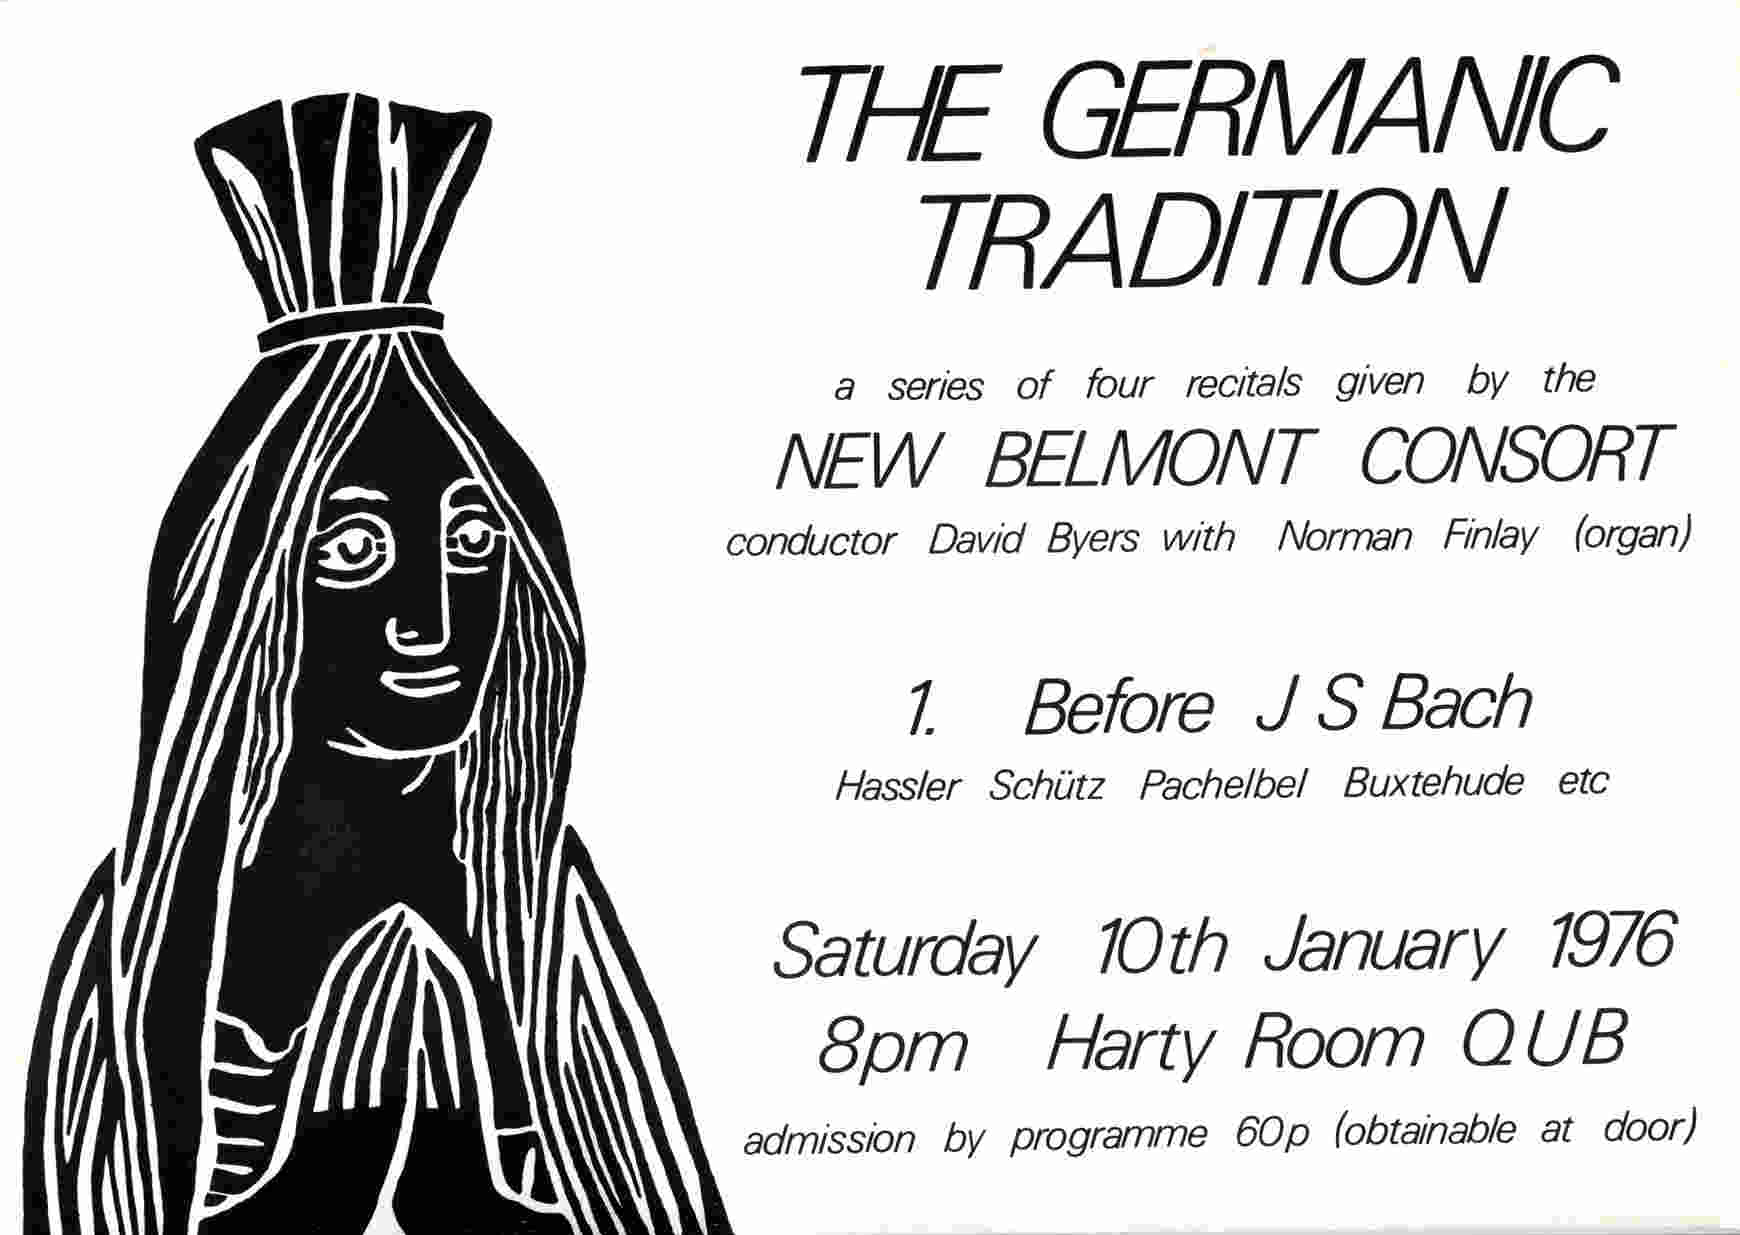 New Belmont Consort Germanic 1